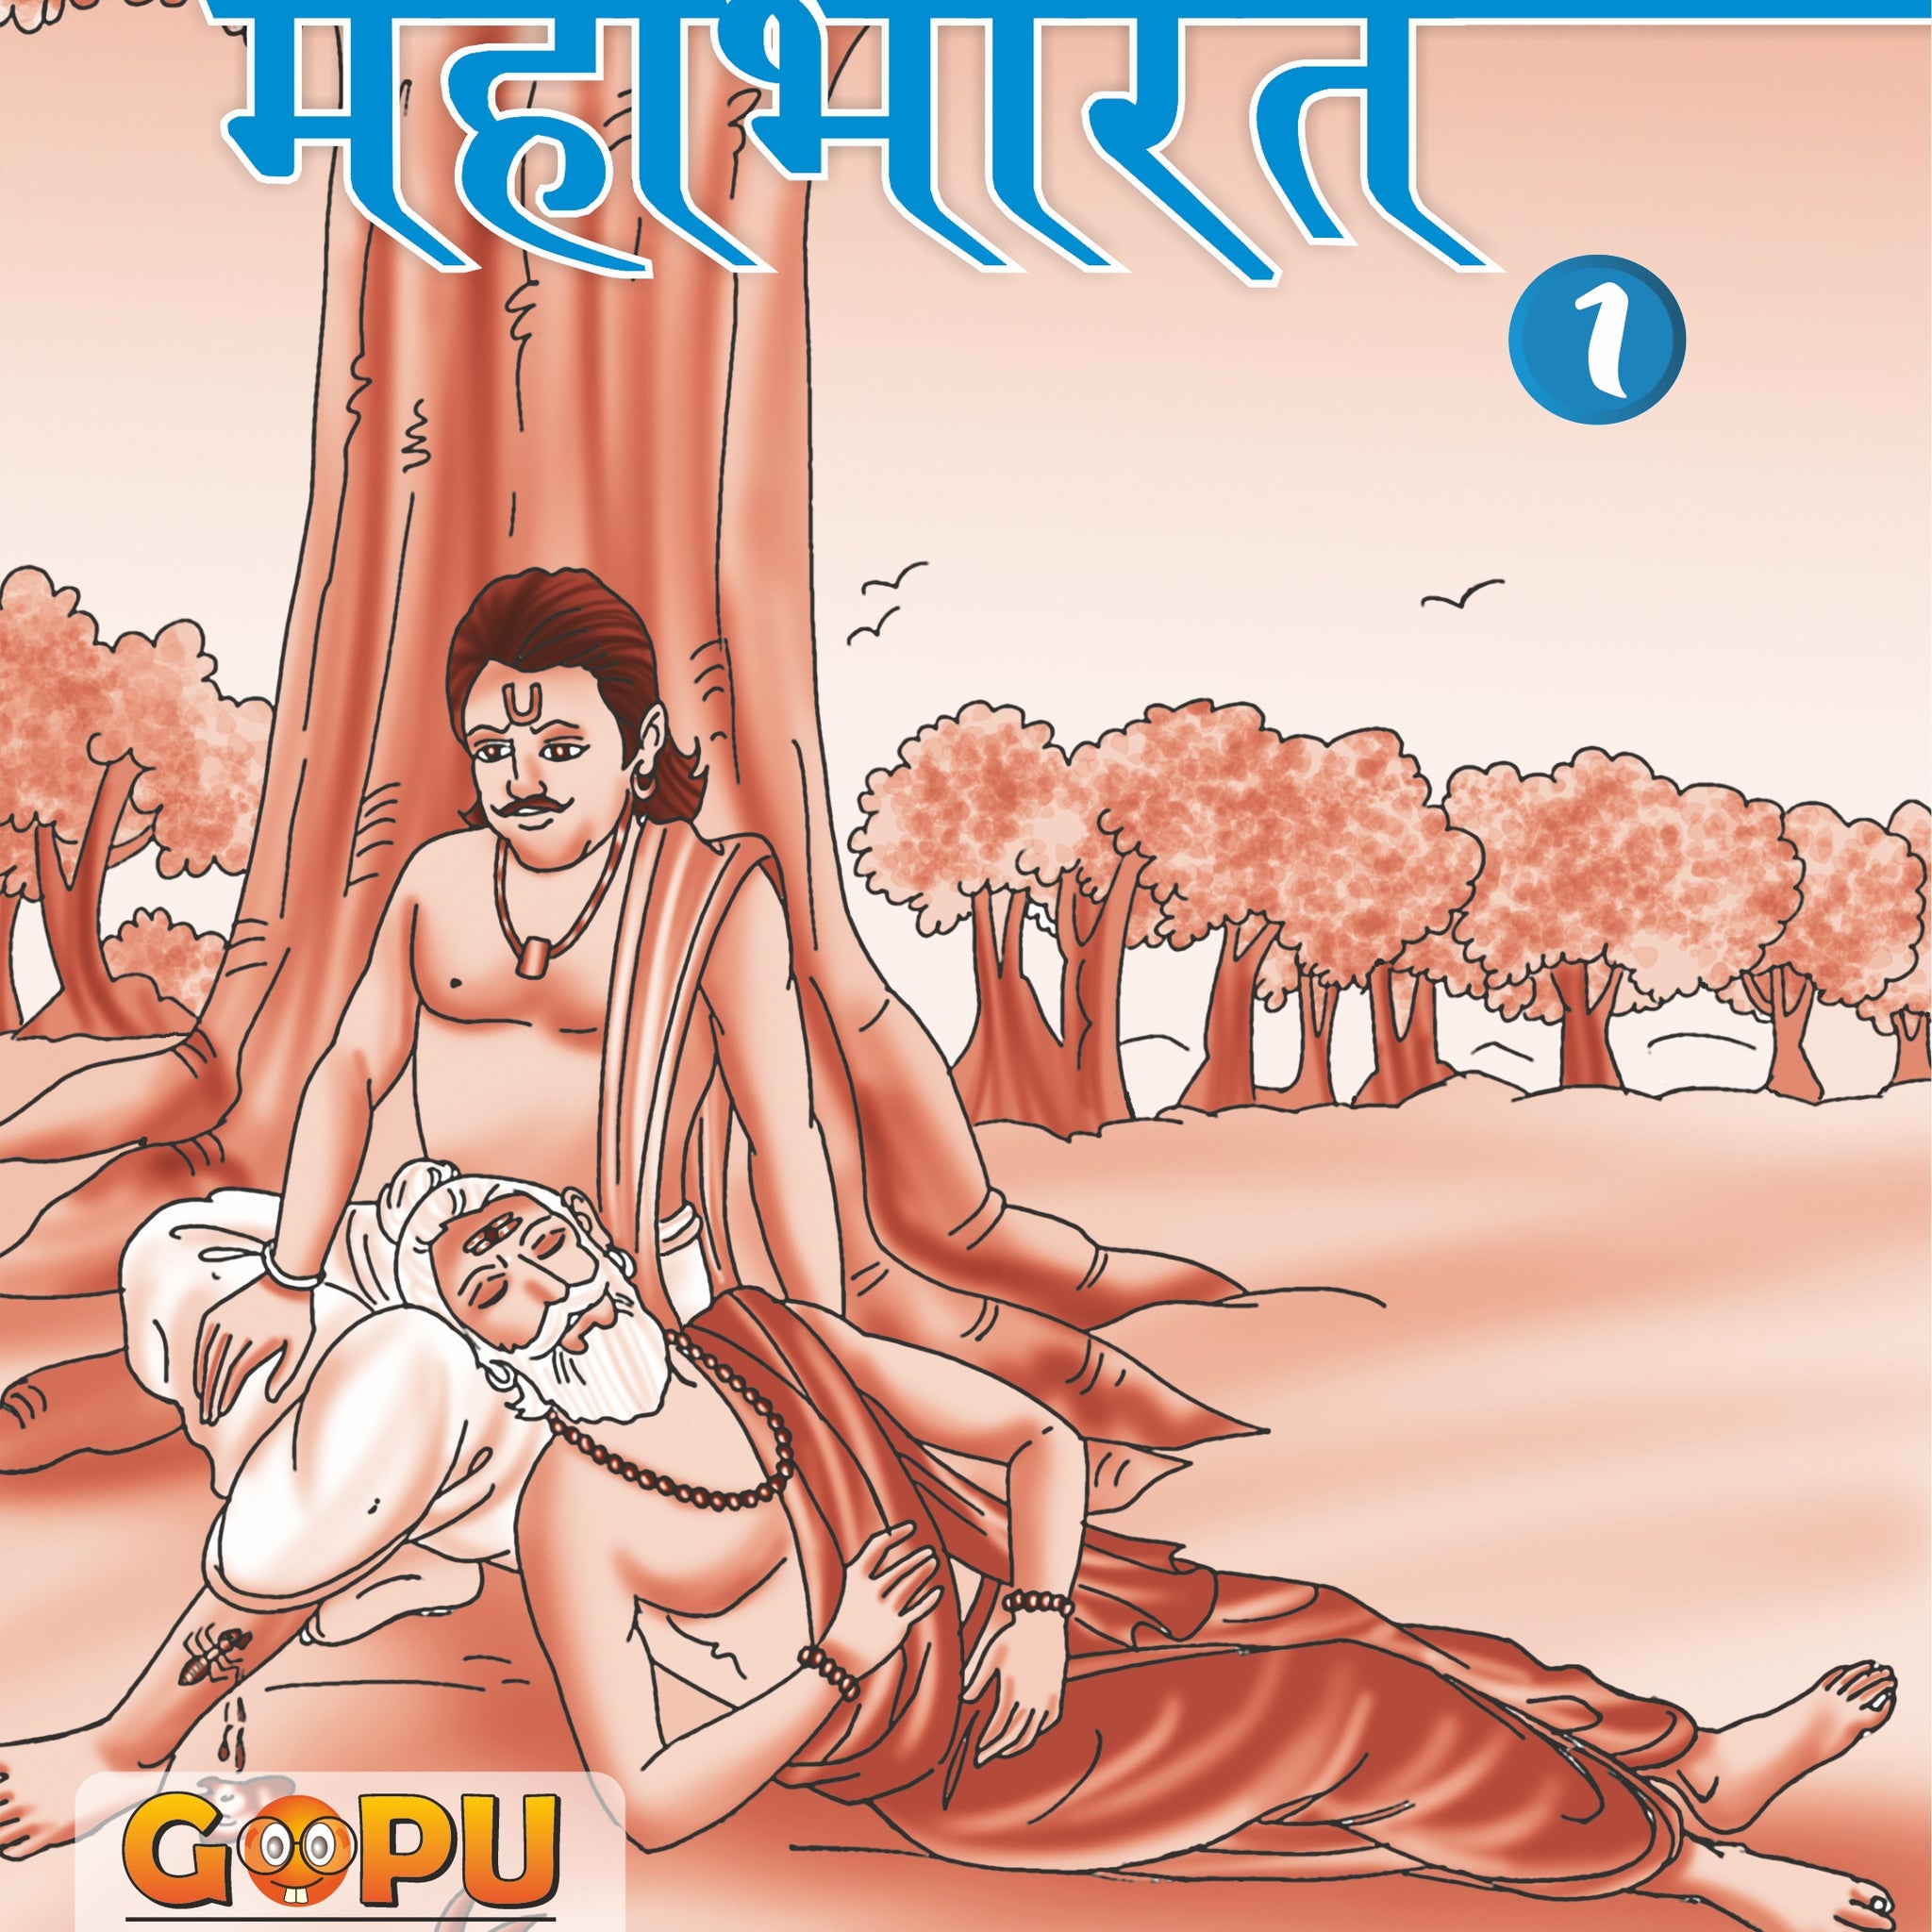 Mahabharat Bhaag 1